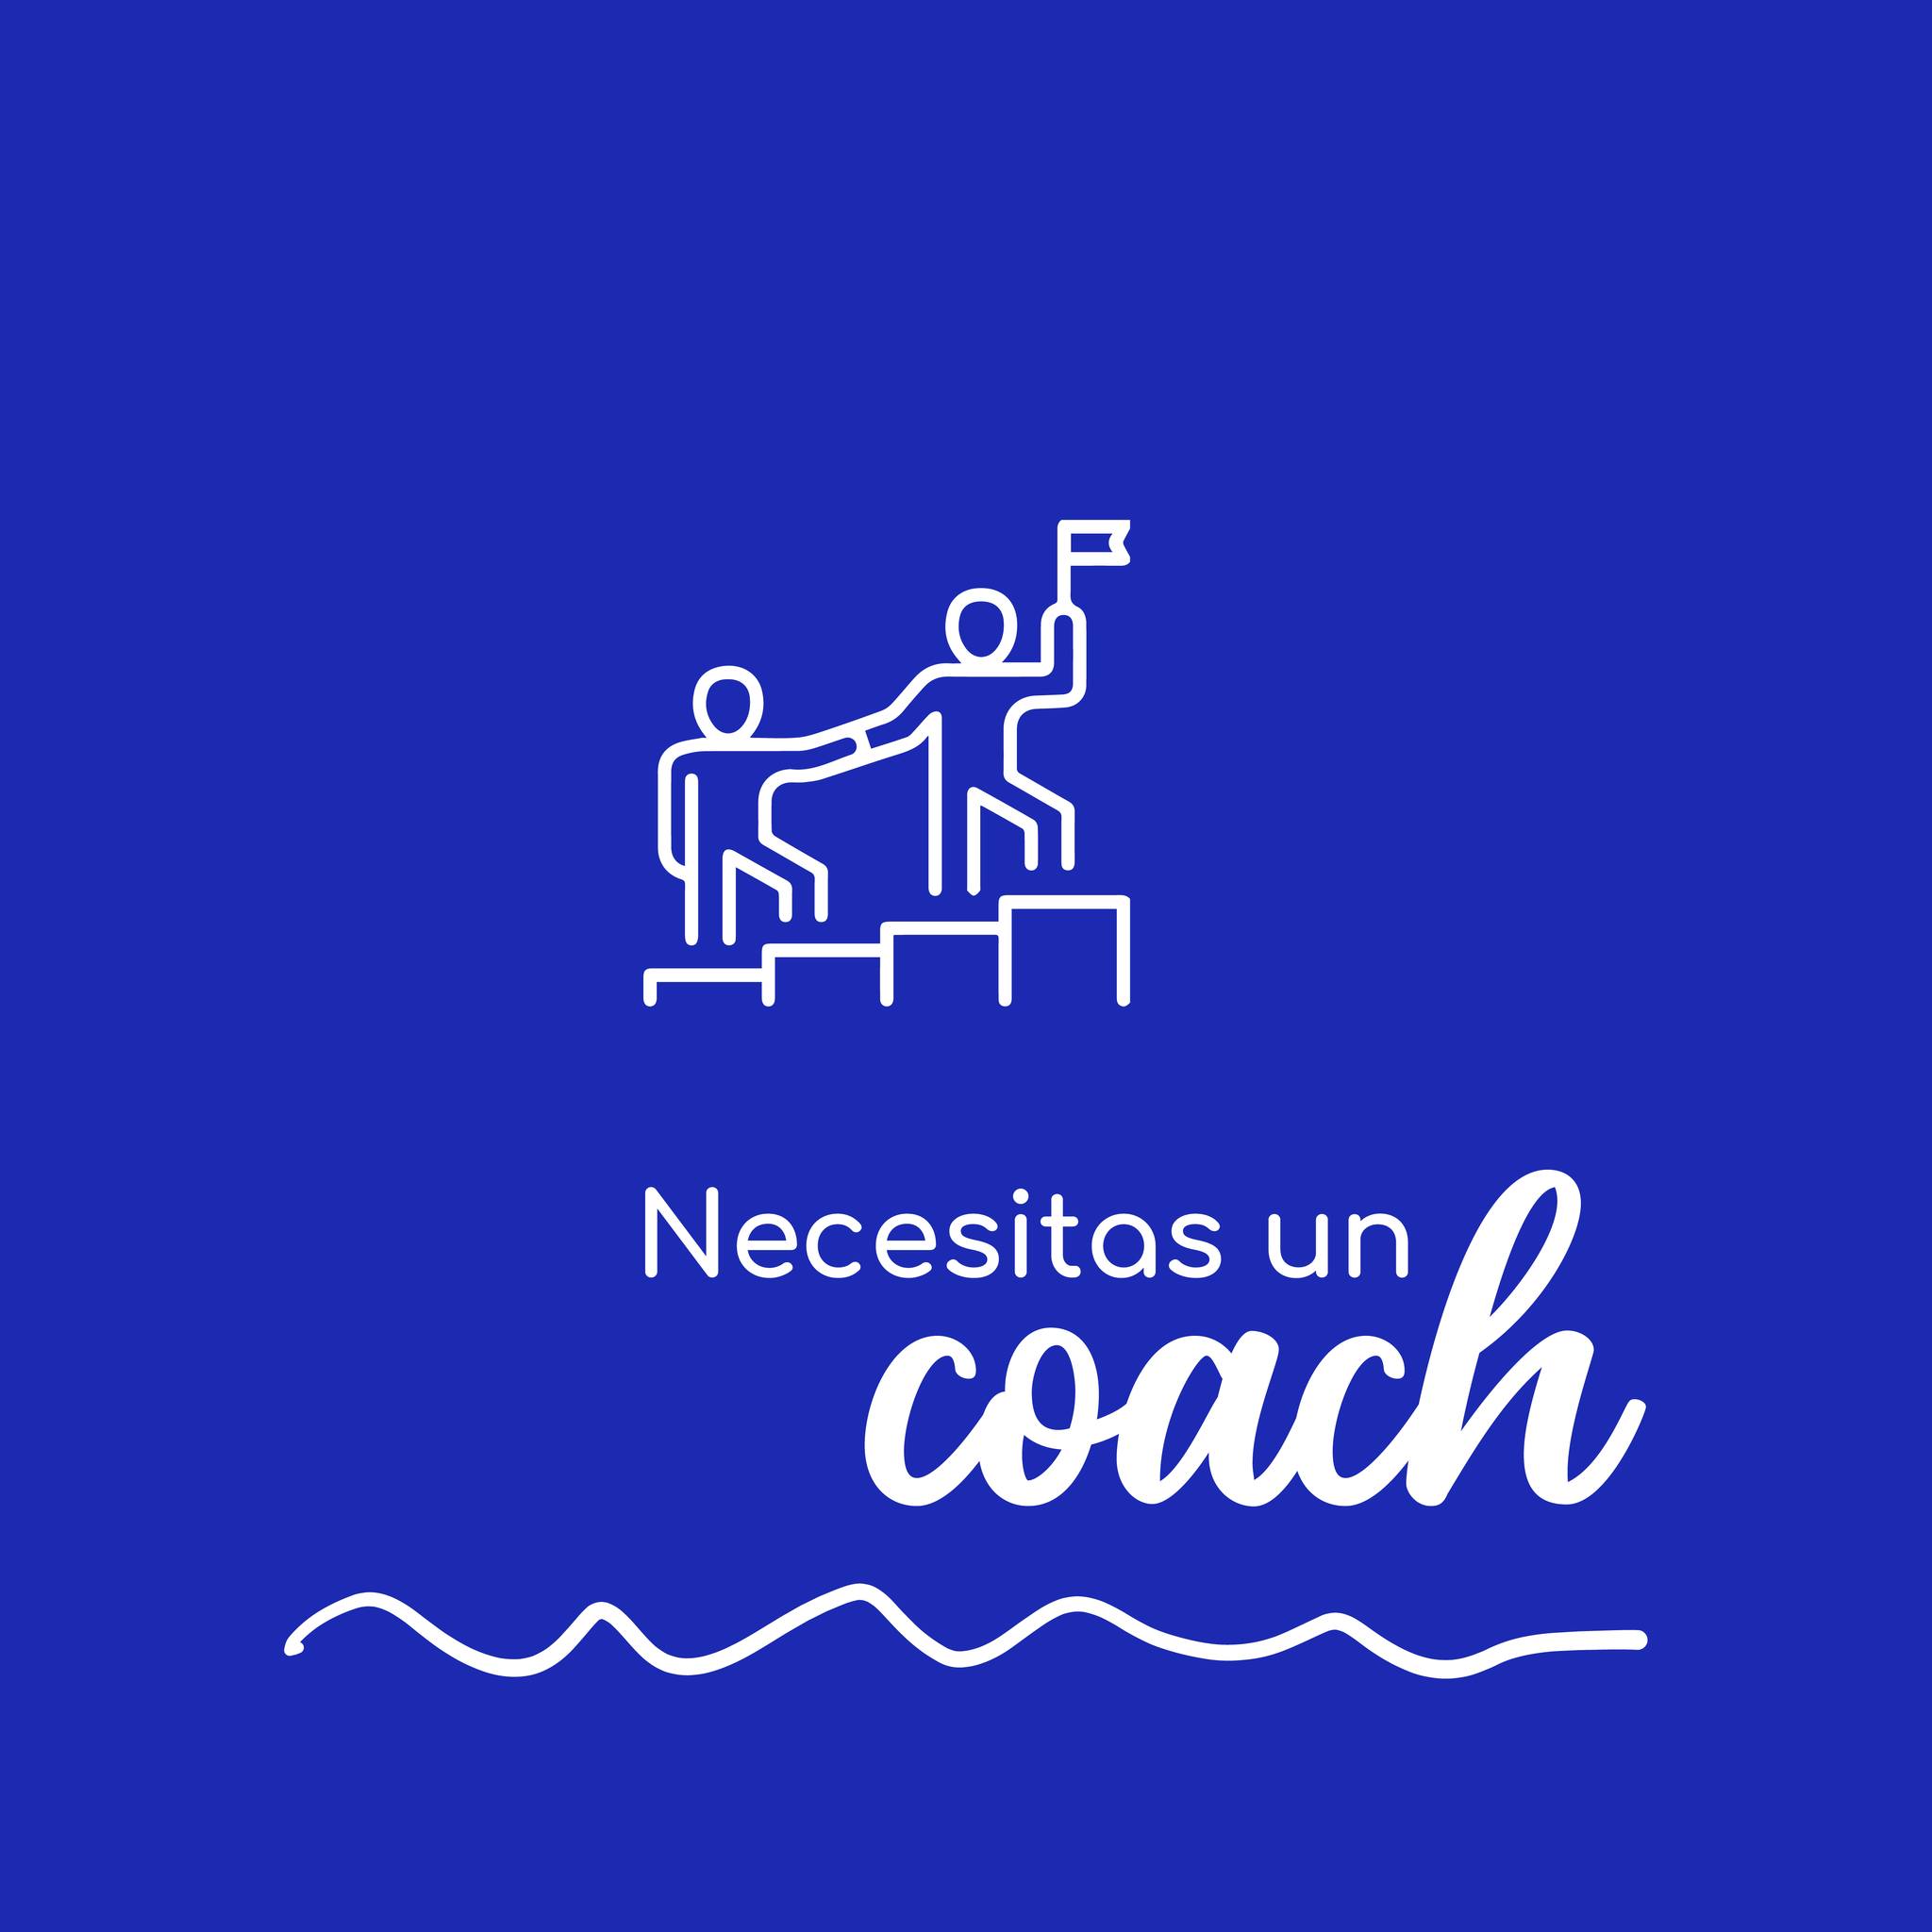 ¡Necesitas un coach!